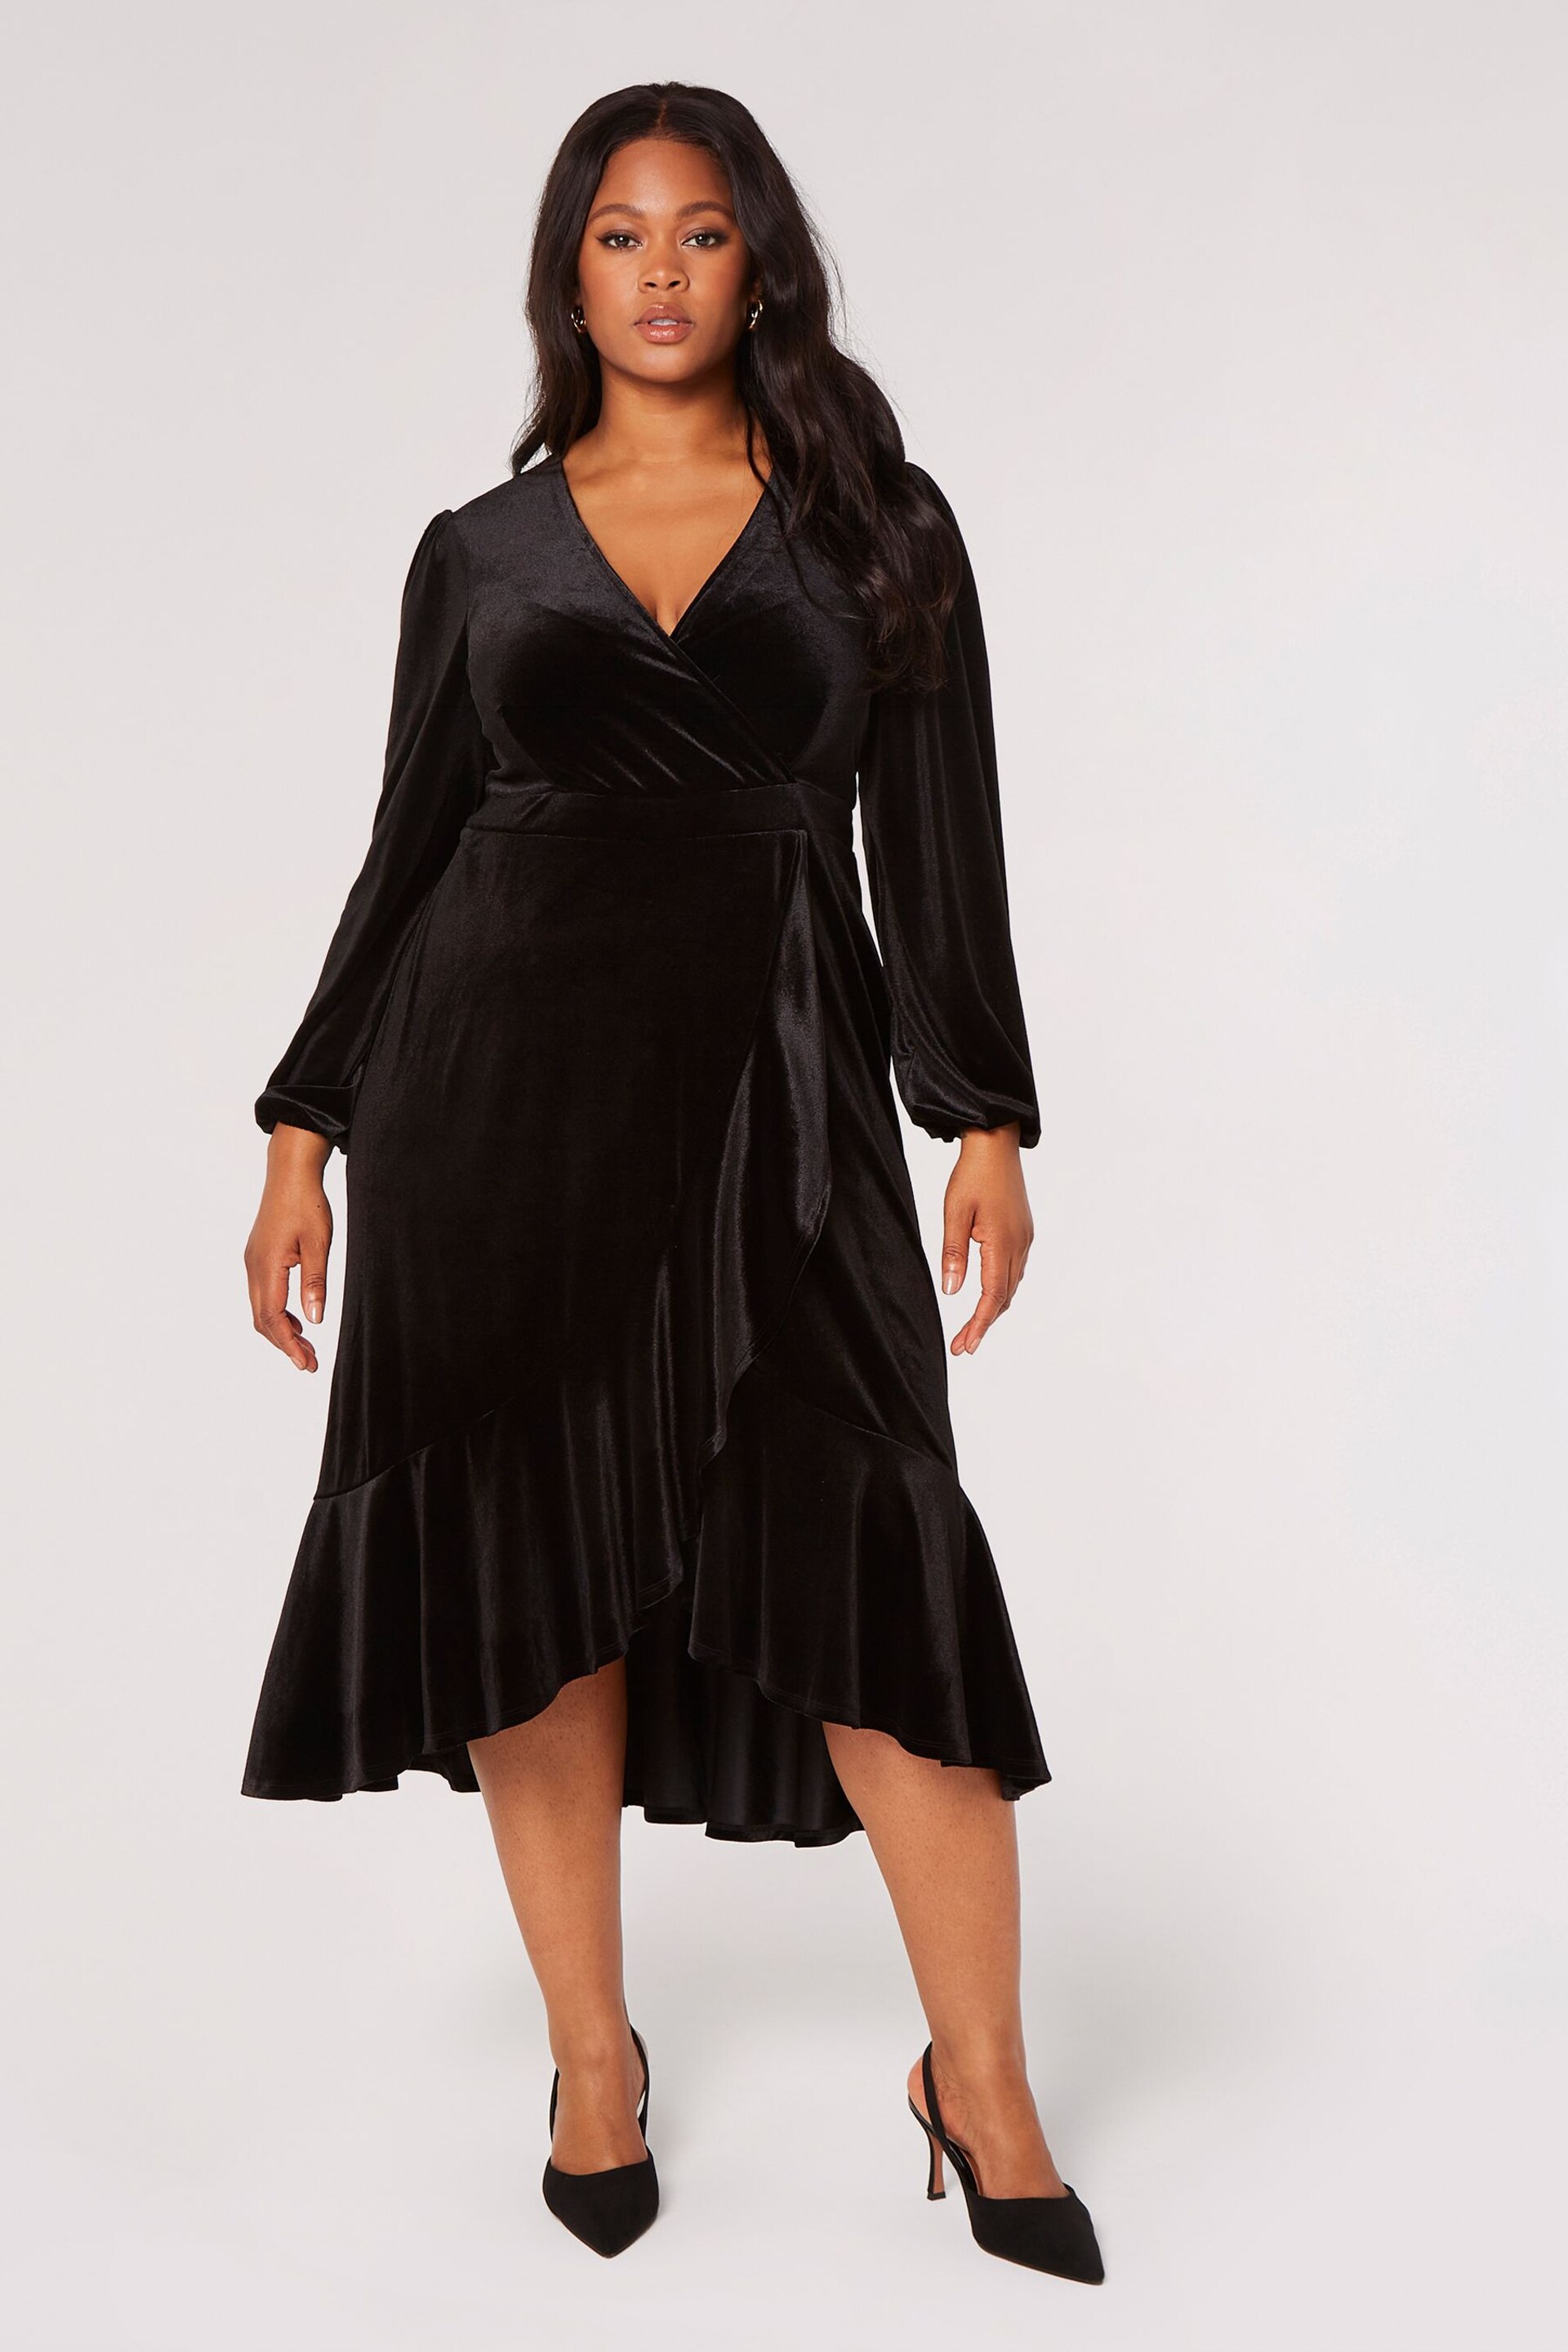 Apricot Black Velvet Faux Wrap Billow Sleeve Dress - Image 1 of 4